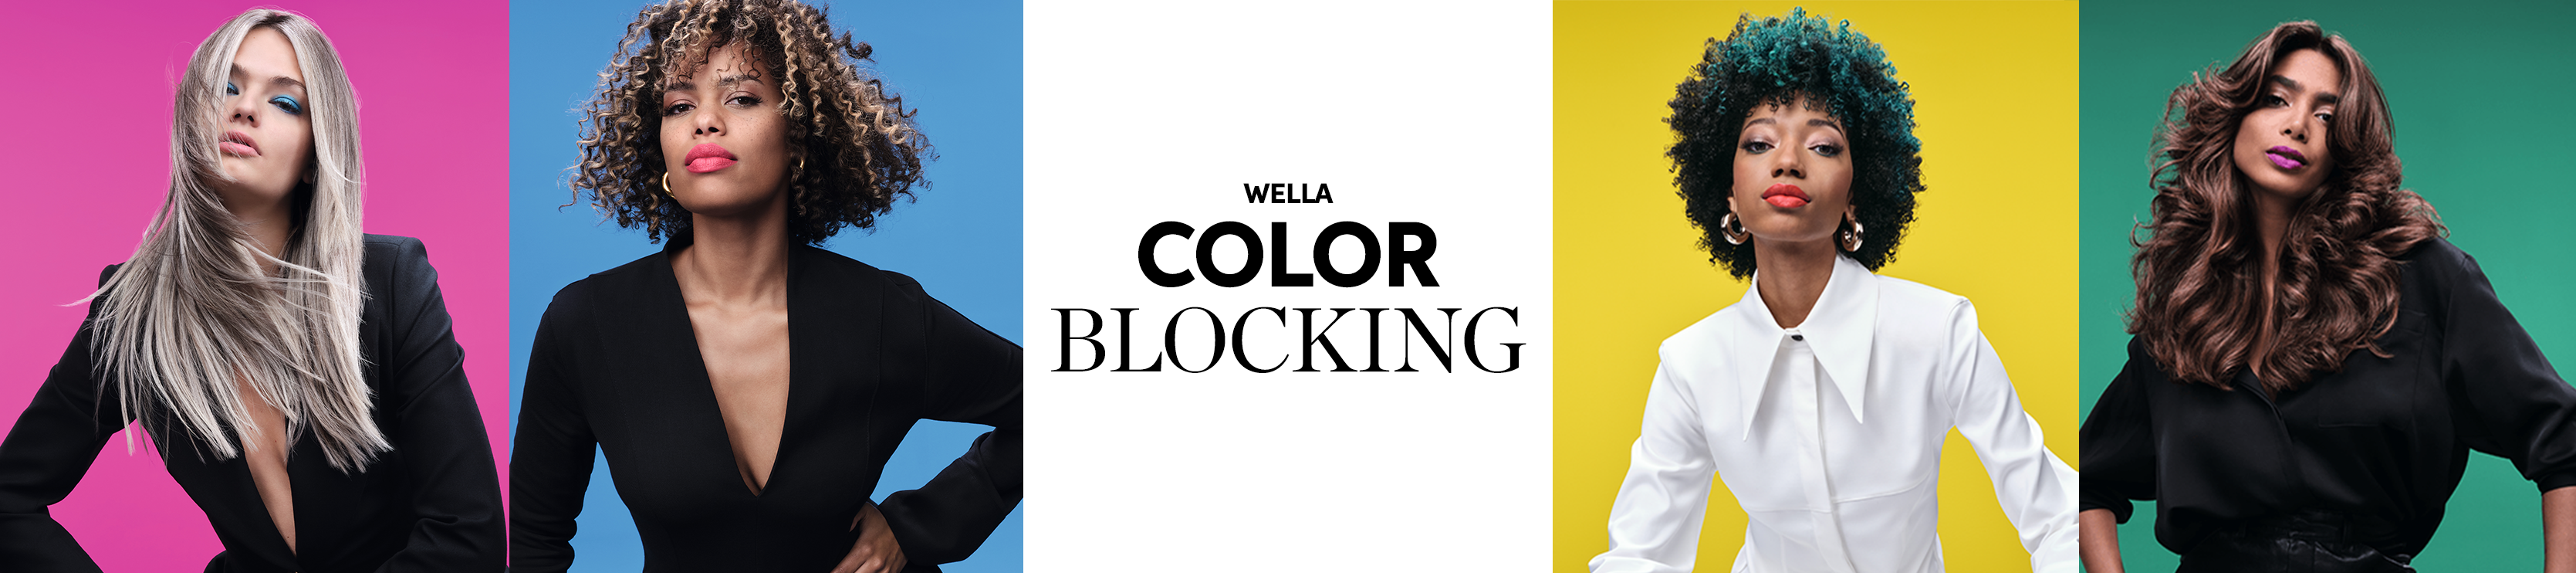 Color Blocking Banner